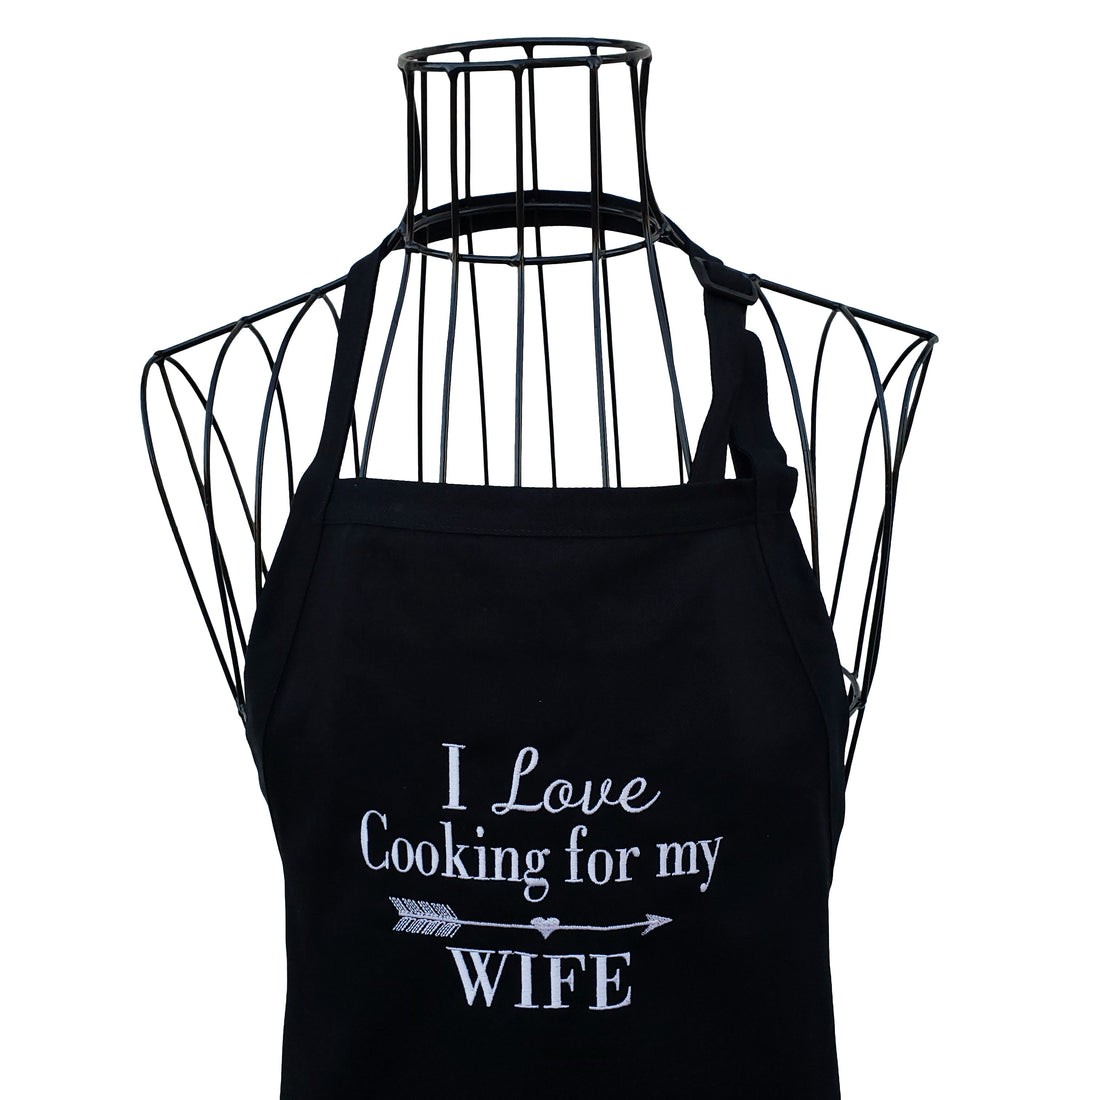 Wife apron - Life Has Just Begun